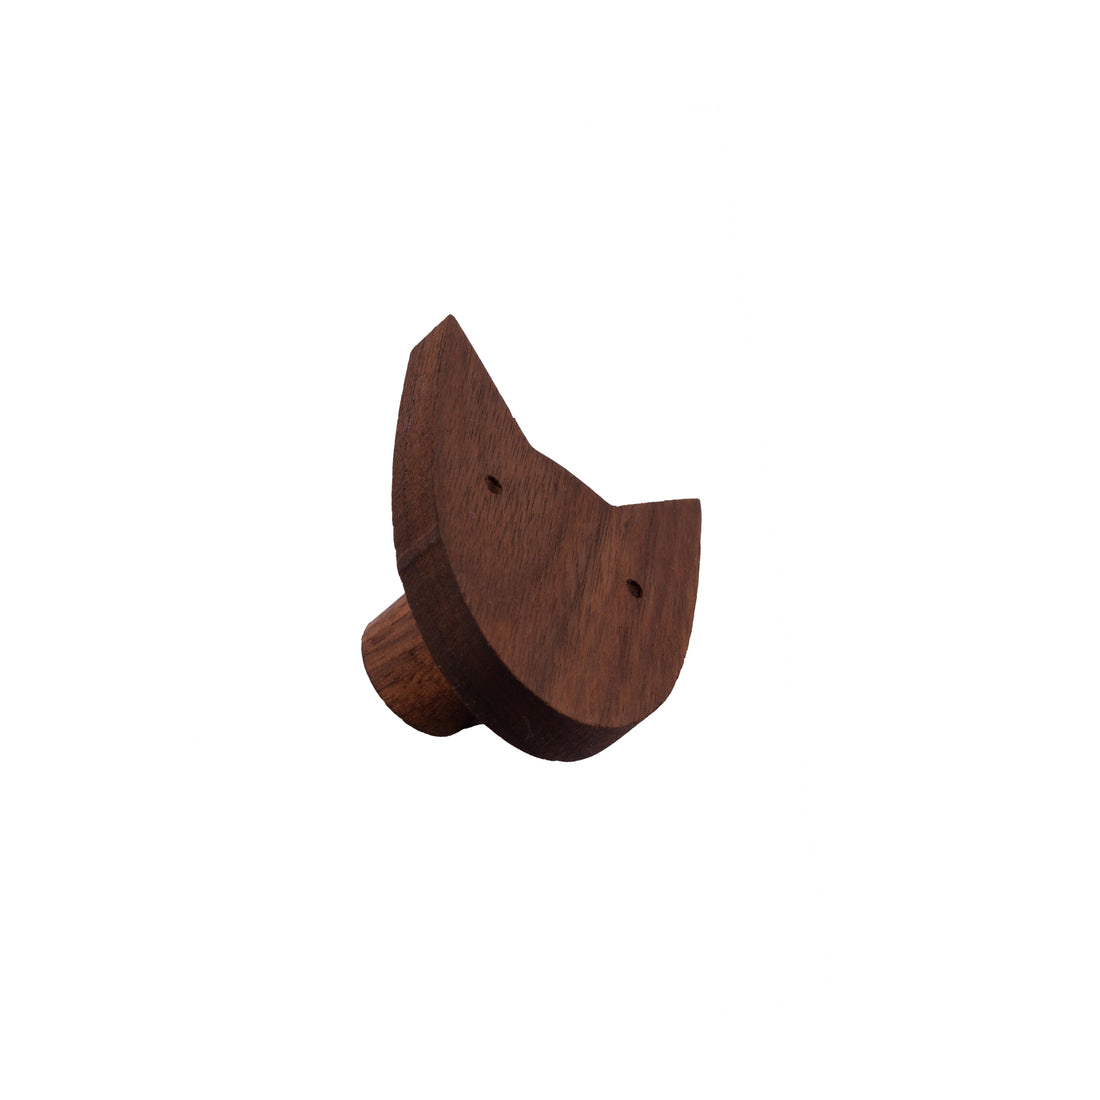 Dog Wooden Knob Hook 70mm / Walnut / Wood - M A N T A R A